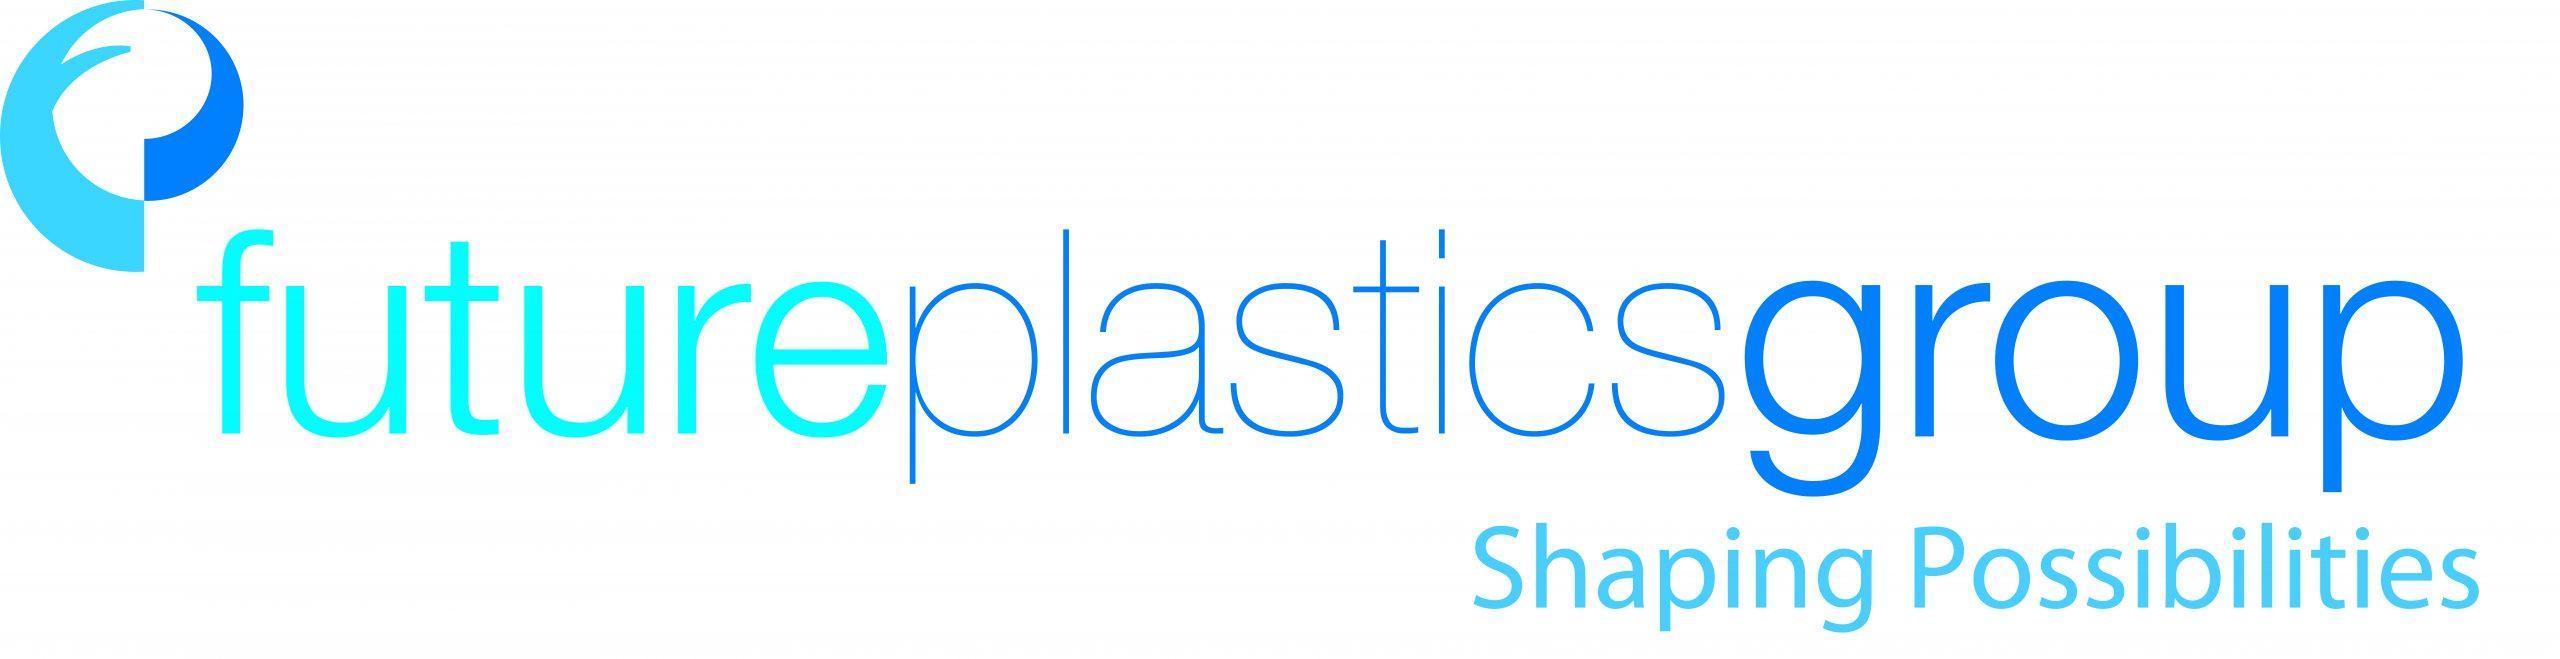 Future Plastics Ltd logo